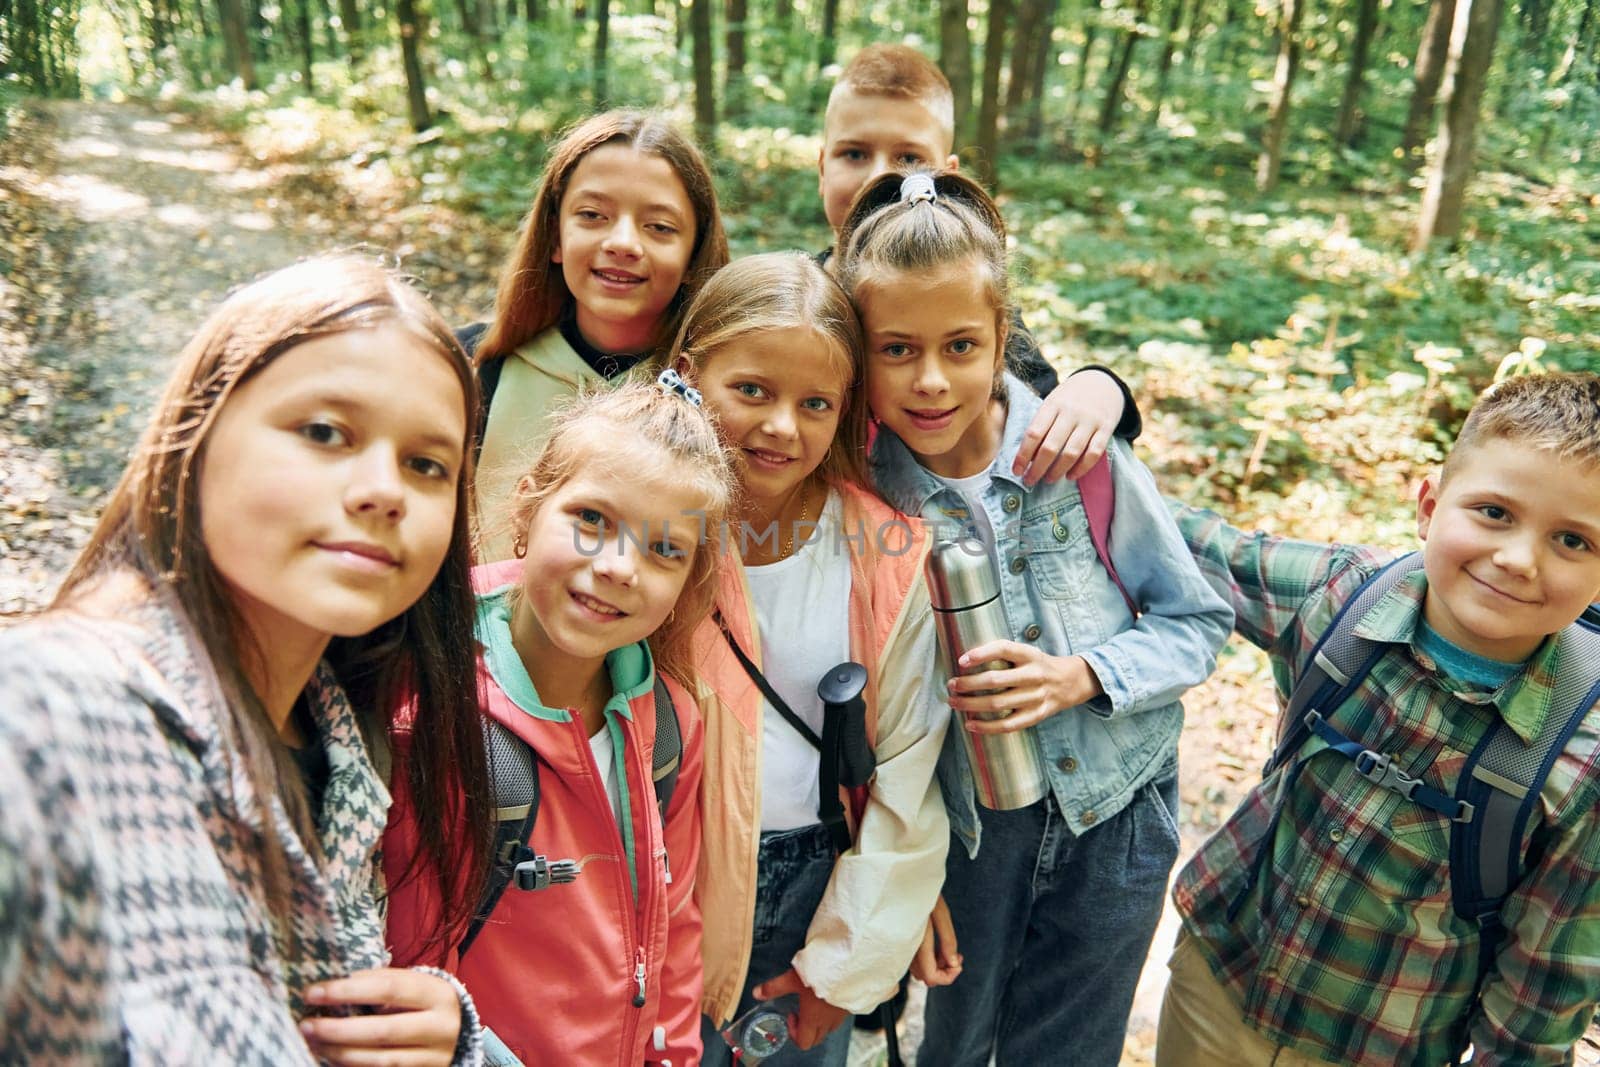 Making selfie. Kids in green forest at summer daytime together by Standret